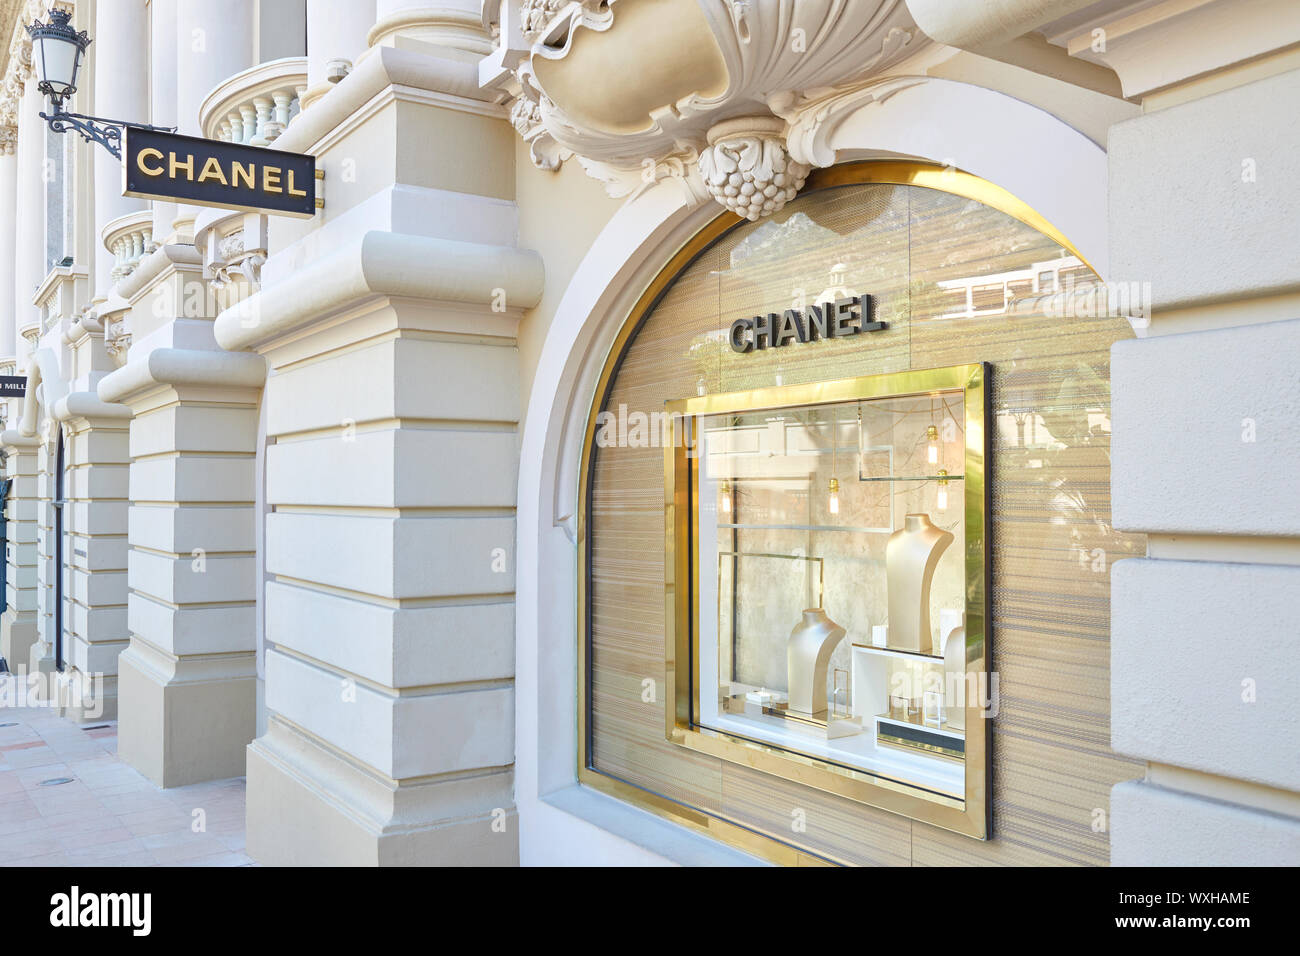 MONTE CARLO, MONACO - 21. AUGUST 2016: Chanel Mode und Schmuck Luxus store Fenster leer in Monte Carlo, Monaco. Stockfoto